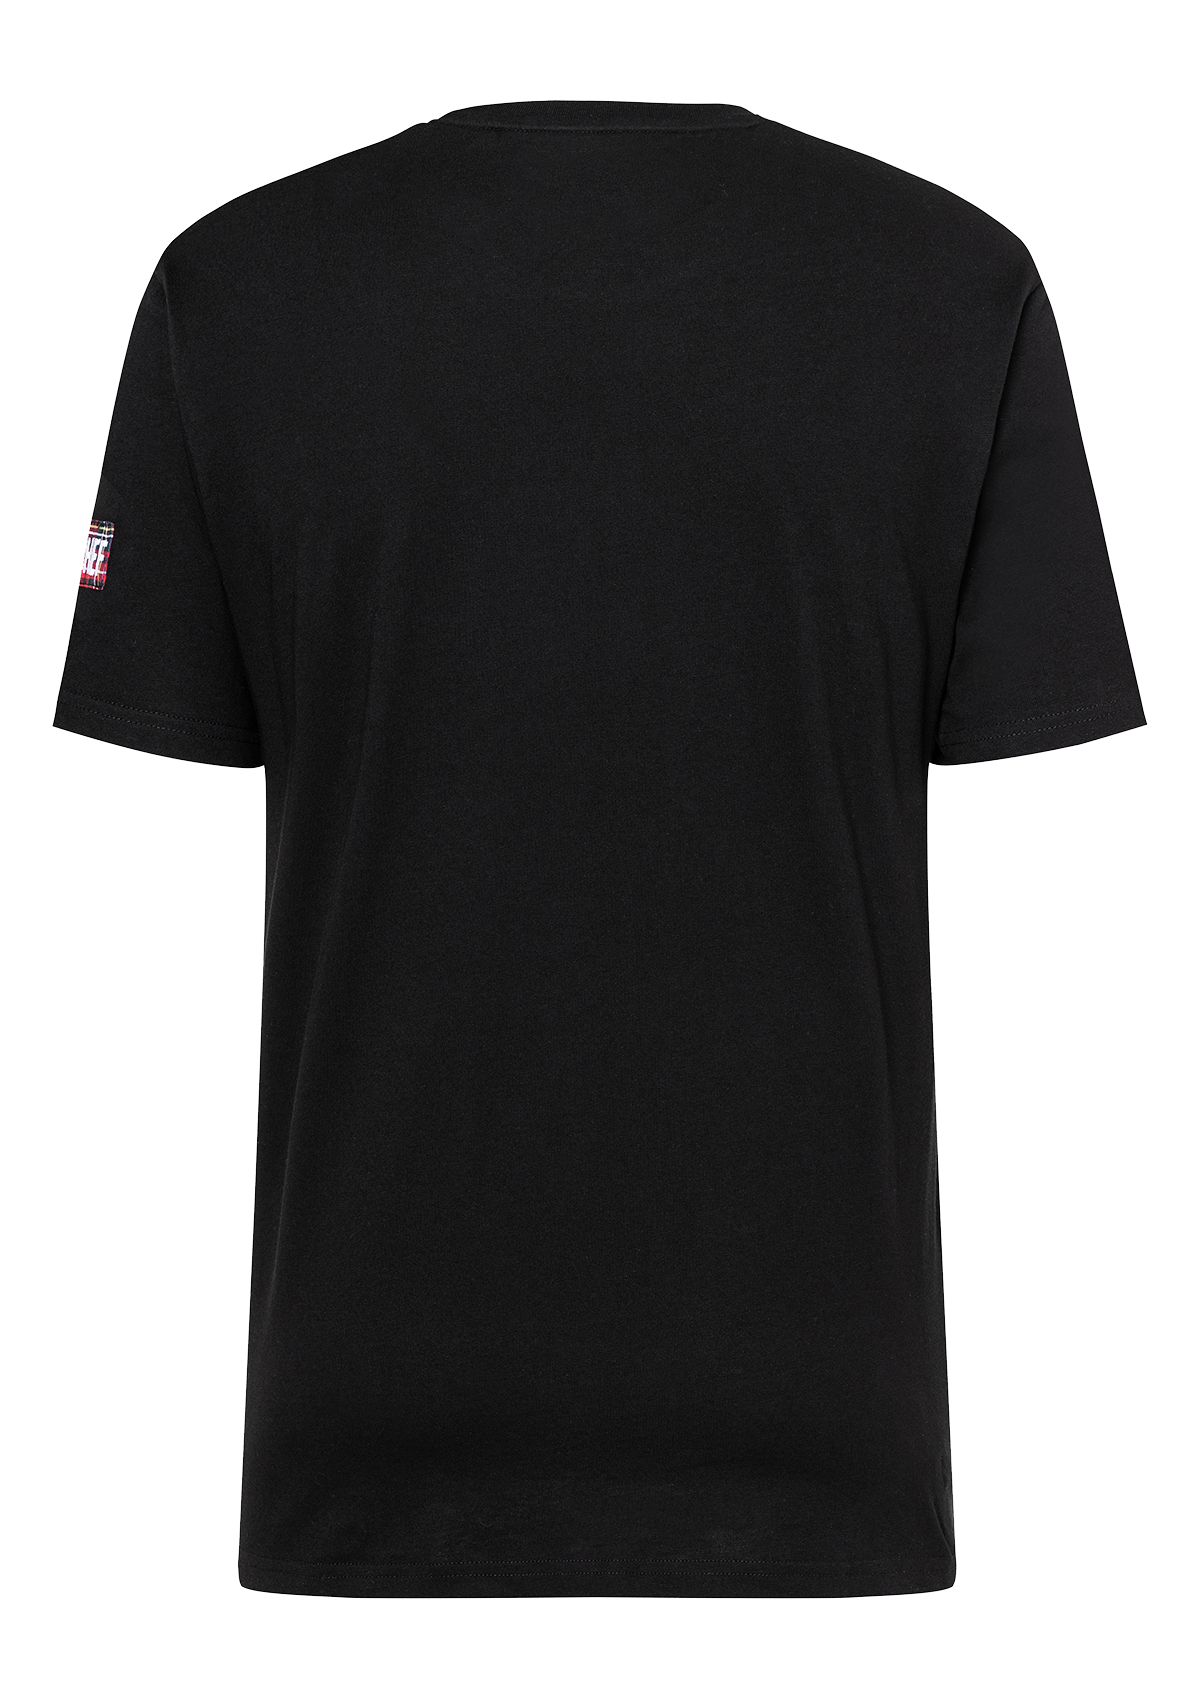 T-Shirt ROCK CHEF® Unisex